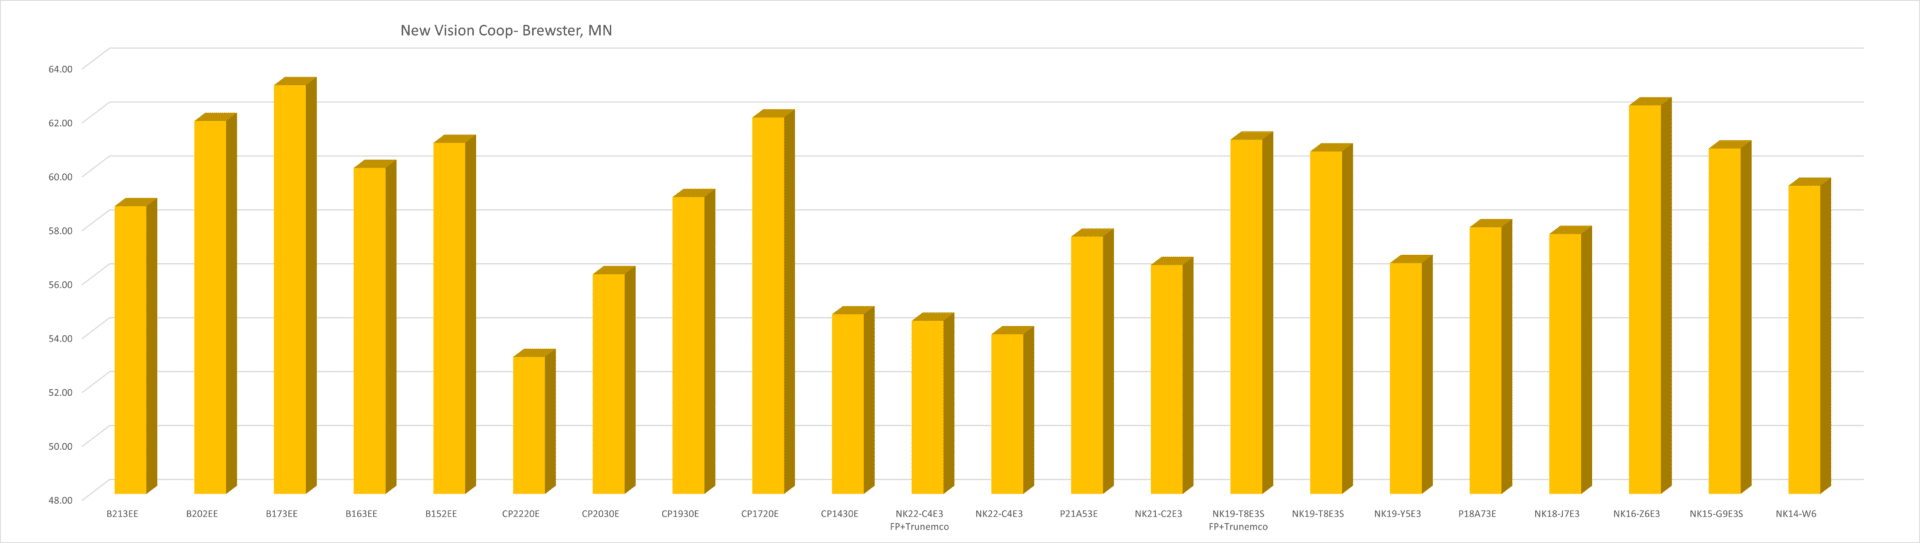 Soybean Data